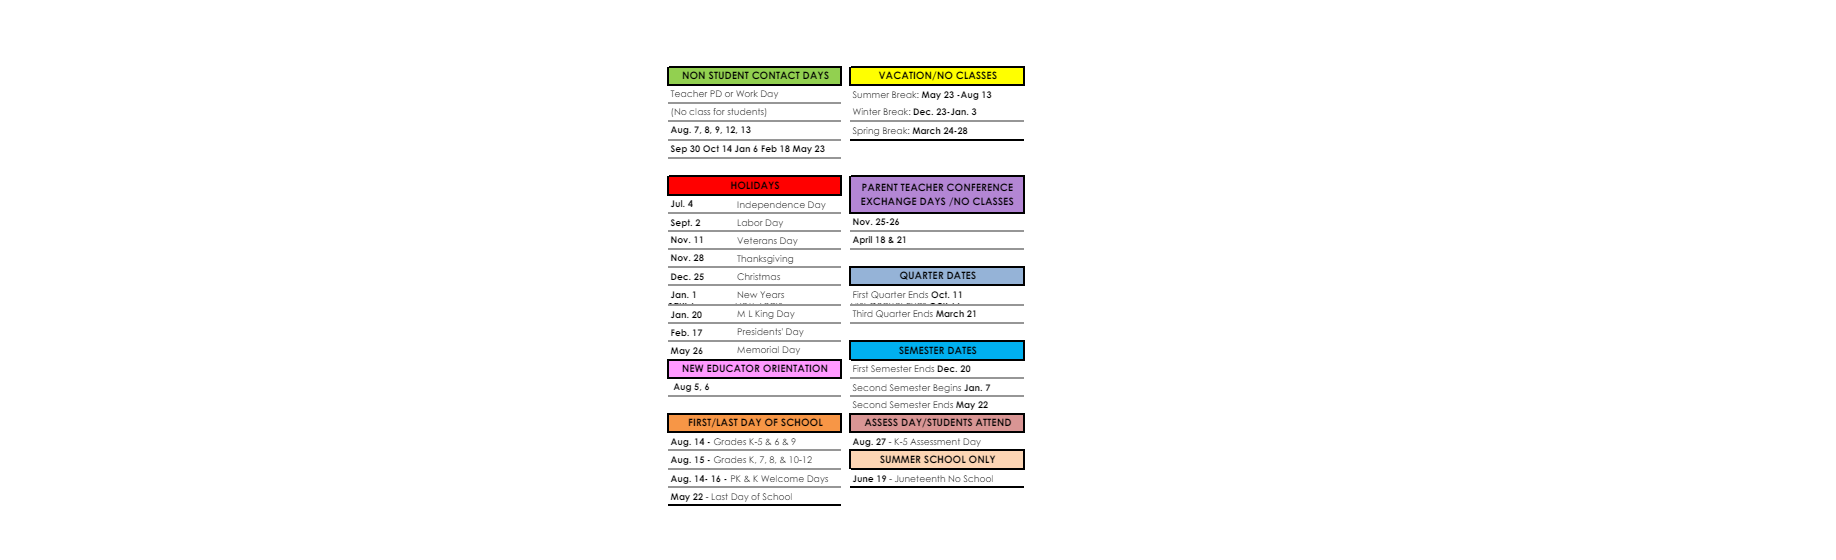 District School Academic Calendar Key for Boulder Community School/integrated Studies